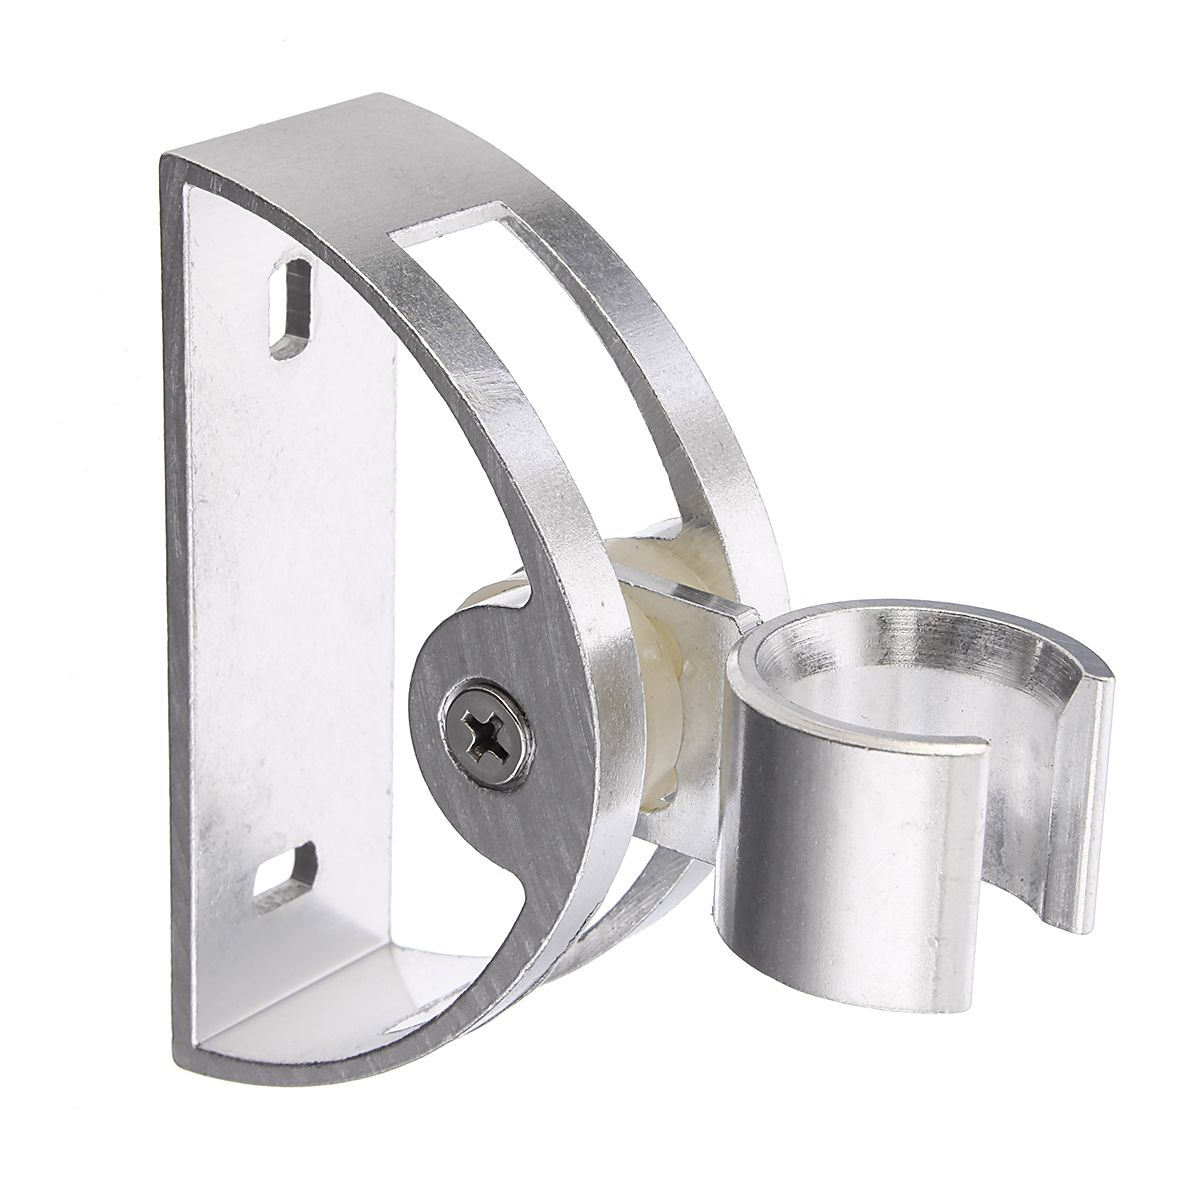 Aluminum-Alloy-Shower-Head-Holder-Wall-Mounted-Shower-Bracket-Holder-Hook-Semicircle-Patterns-1256424